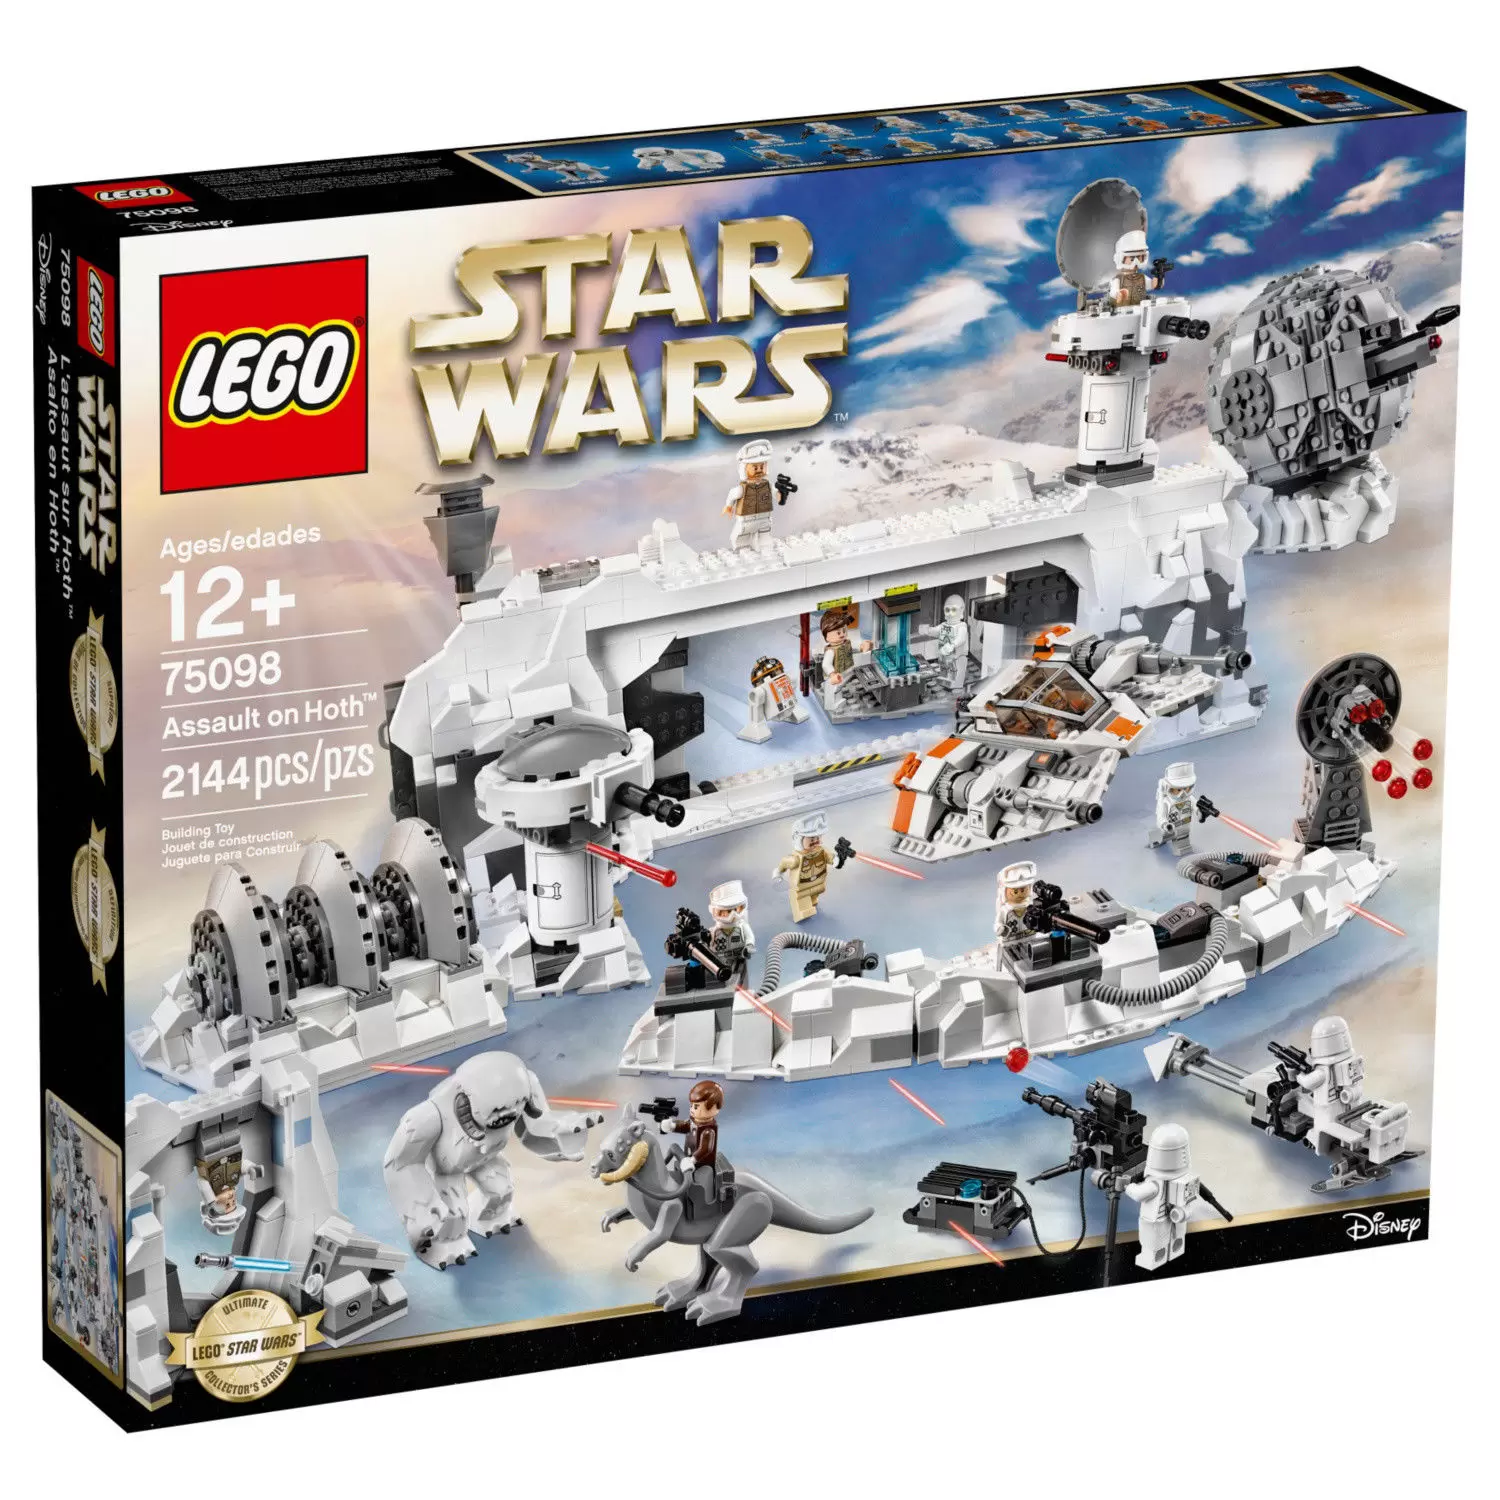 LEGO Star Wars - Assault on Hoth